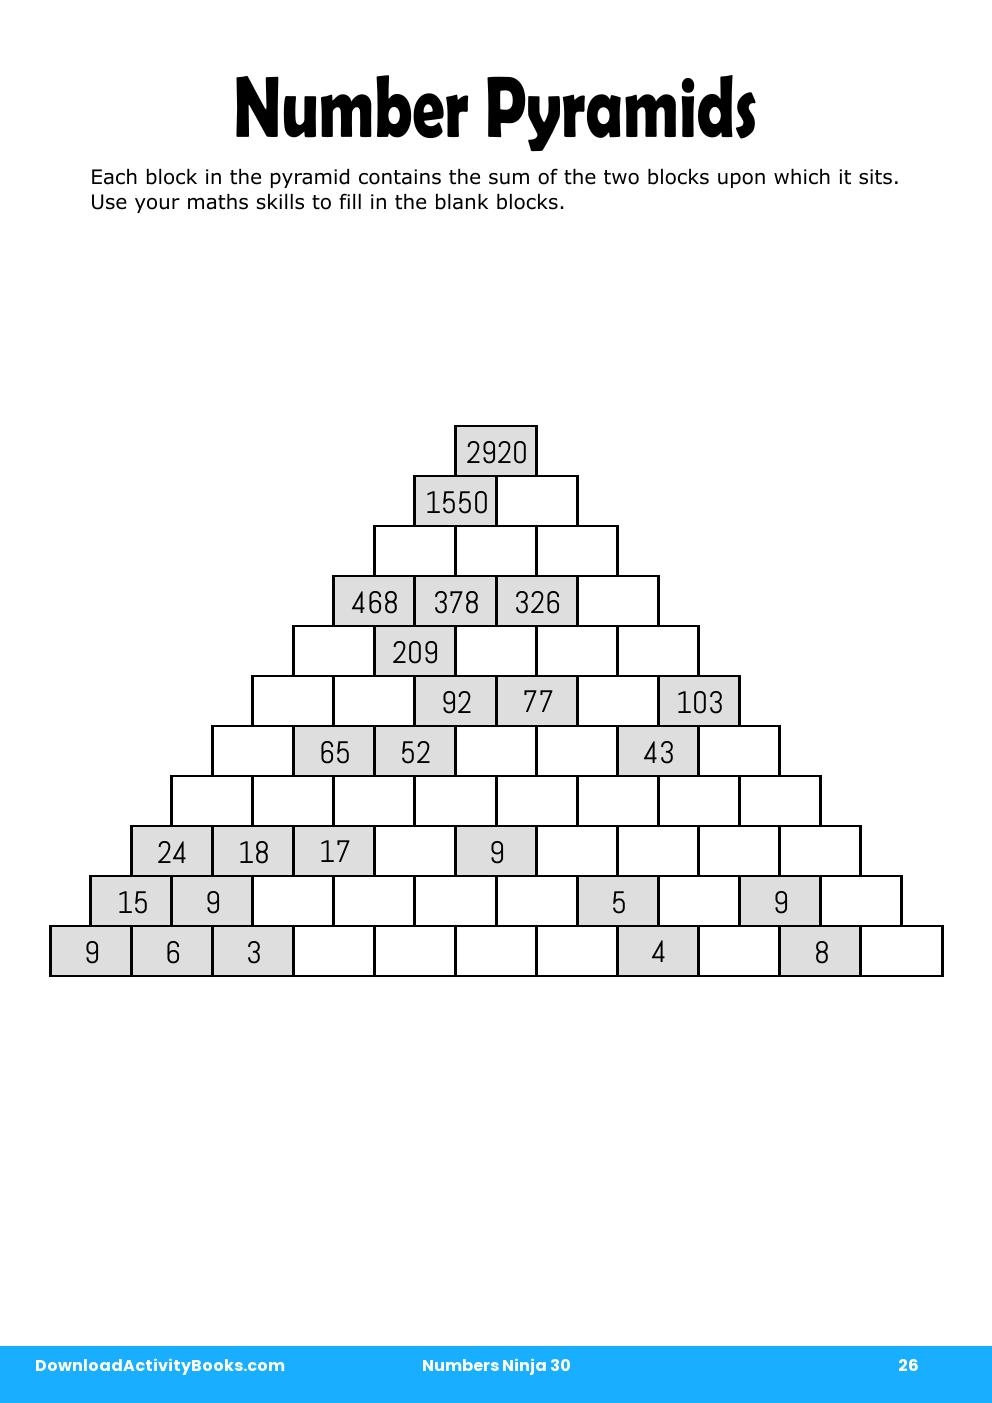 Number Pyramids in Numbers Ninja 30